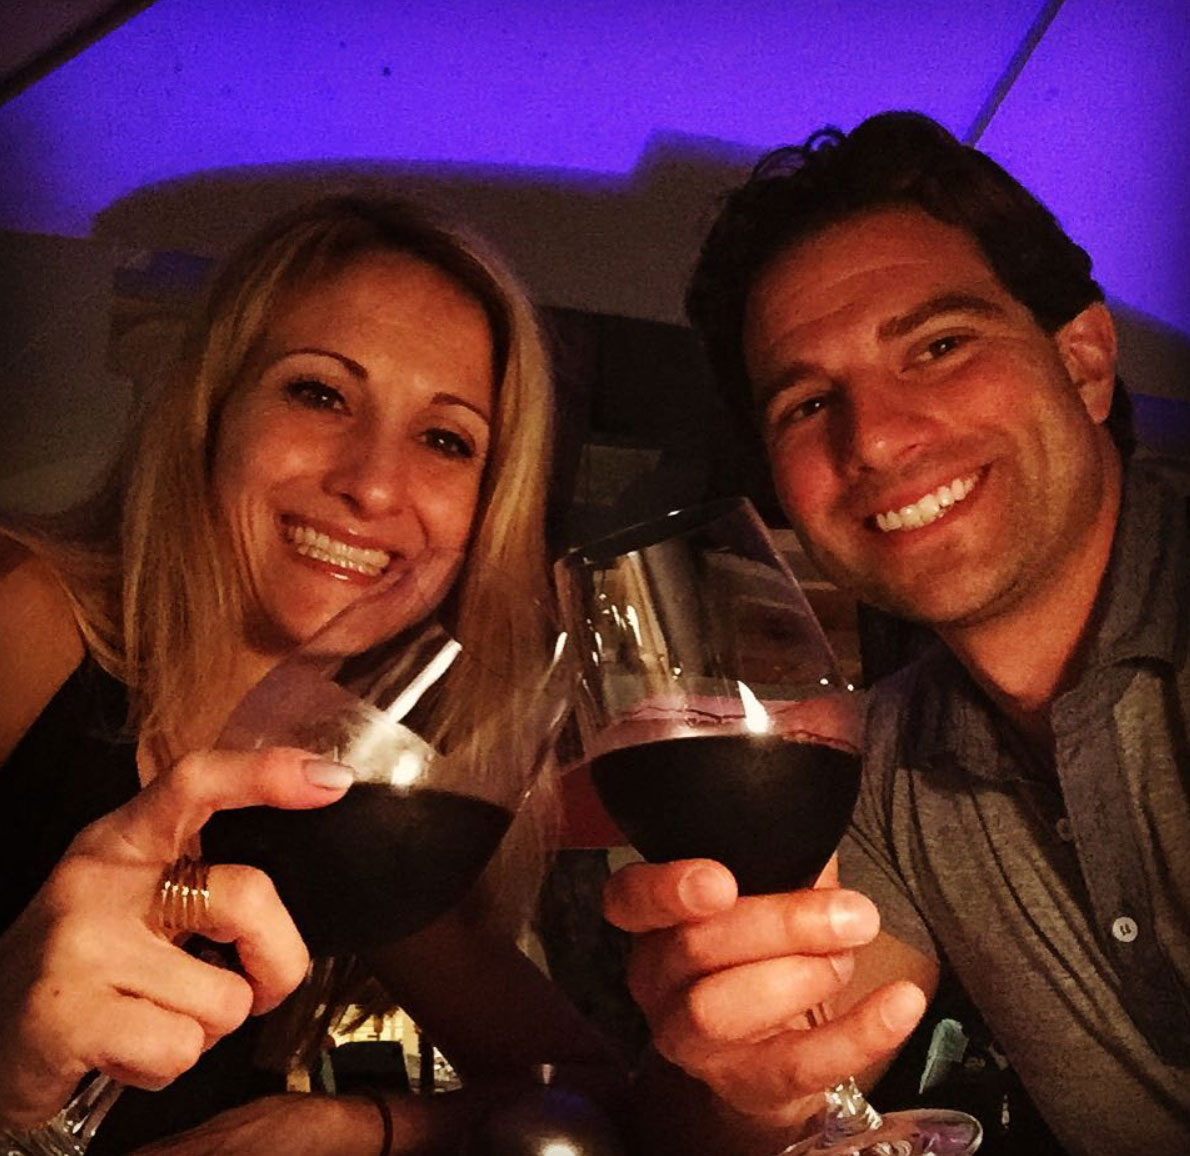 Sabrina and Scott McGillivray clinking wine glasses